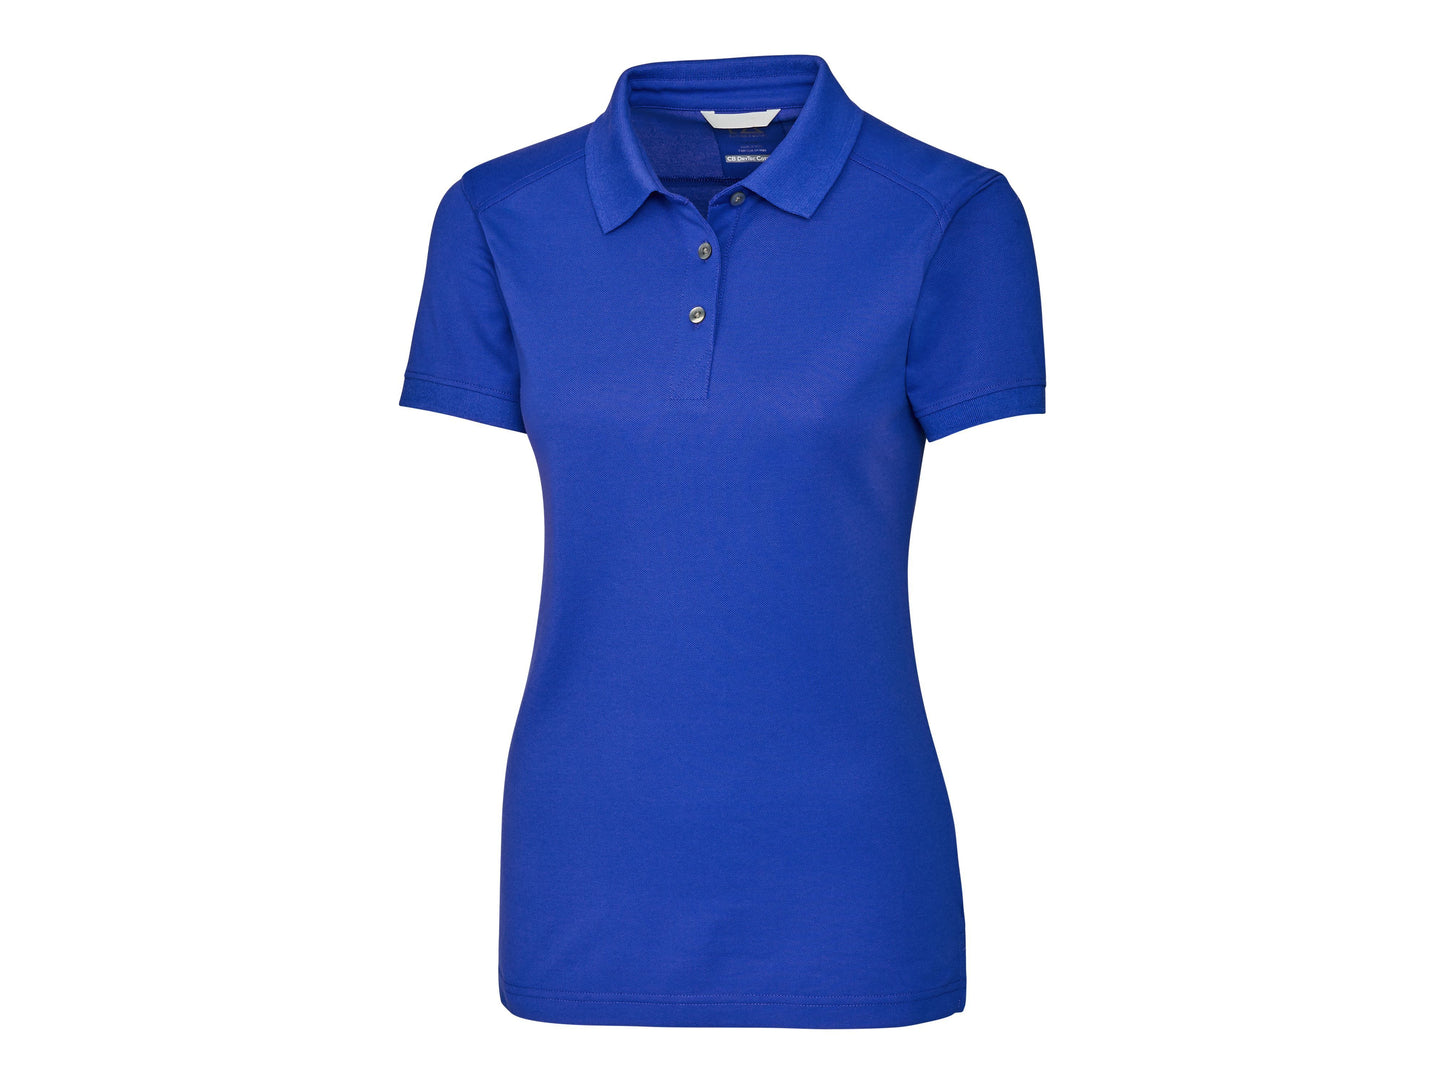 Cutter and Buck Shirts Advantage Polo (Women's Cut) - LCK08685 - Chelan